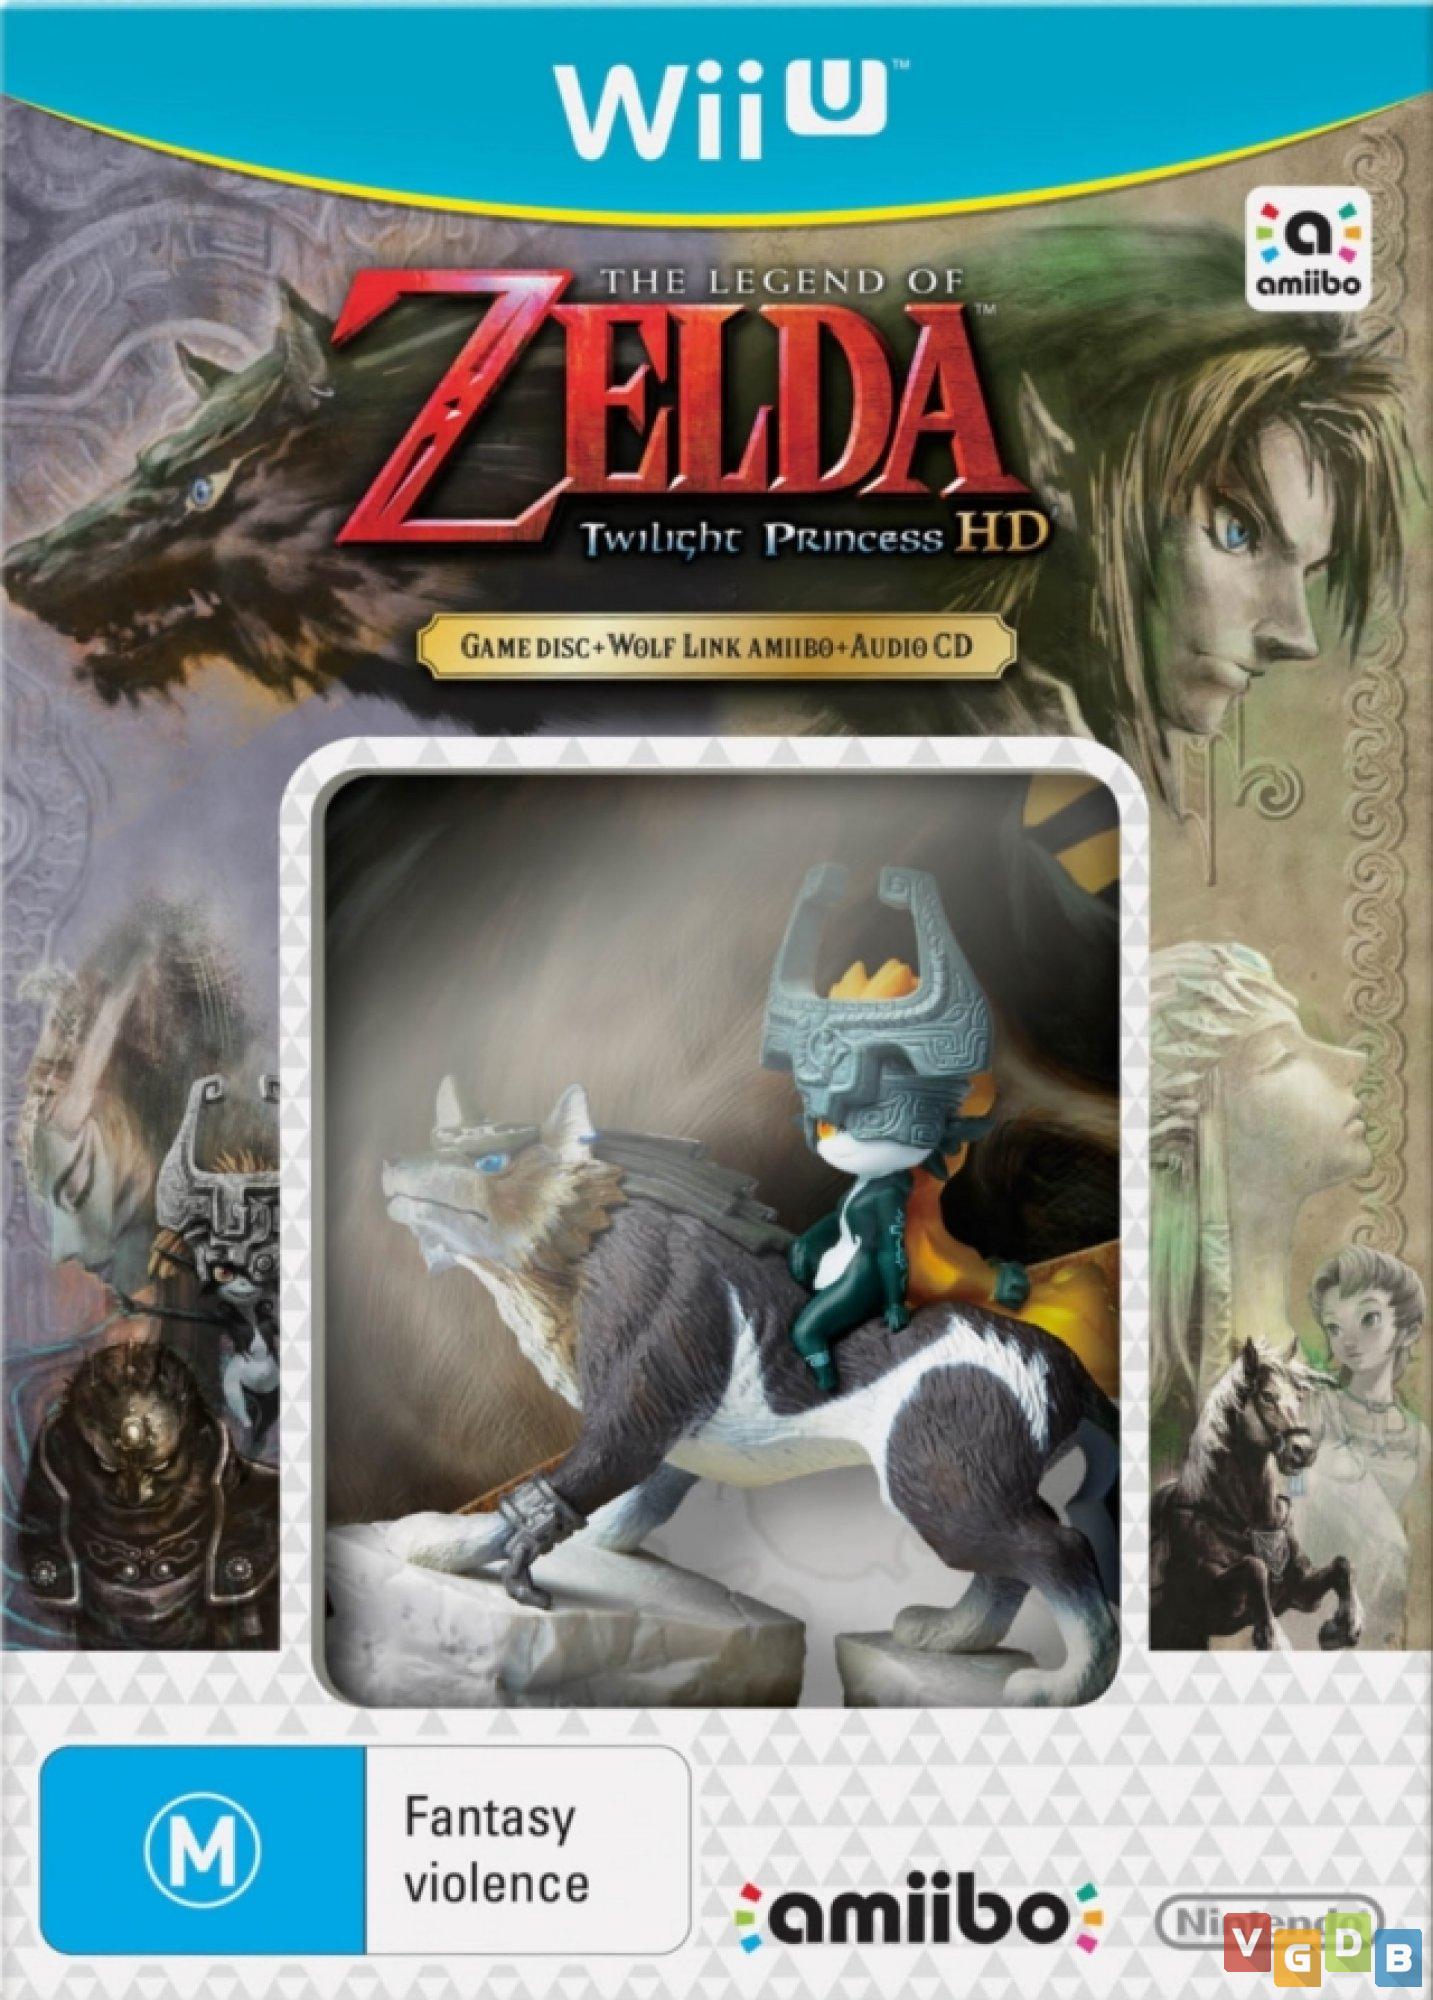 Portable The Legend of Zelda – Twilight Princess PT-BR [ULTRA EXCLUSIVO] –  .::Games Portables – Brasil::.